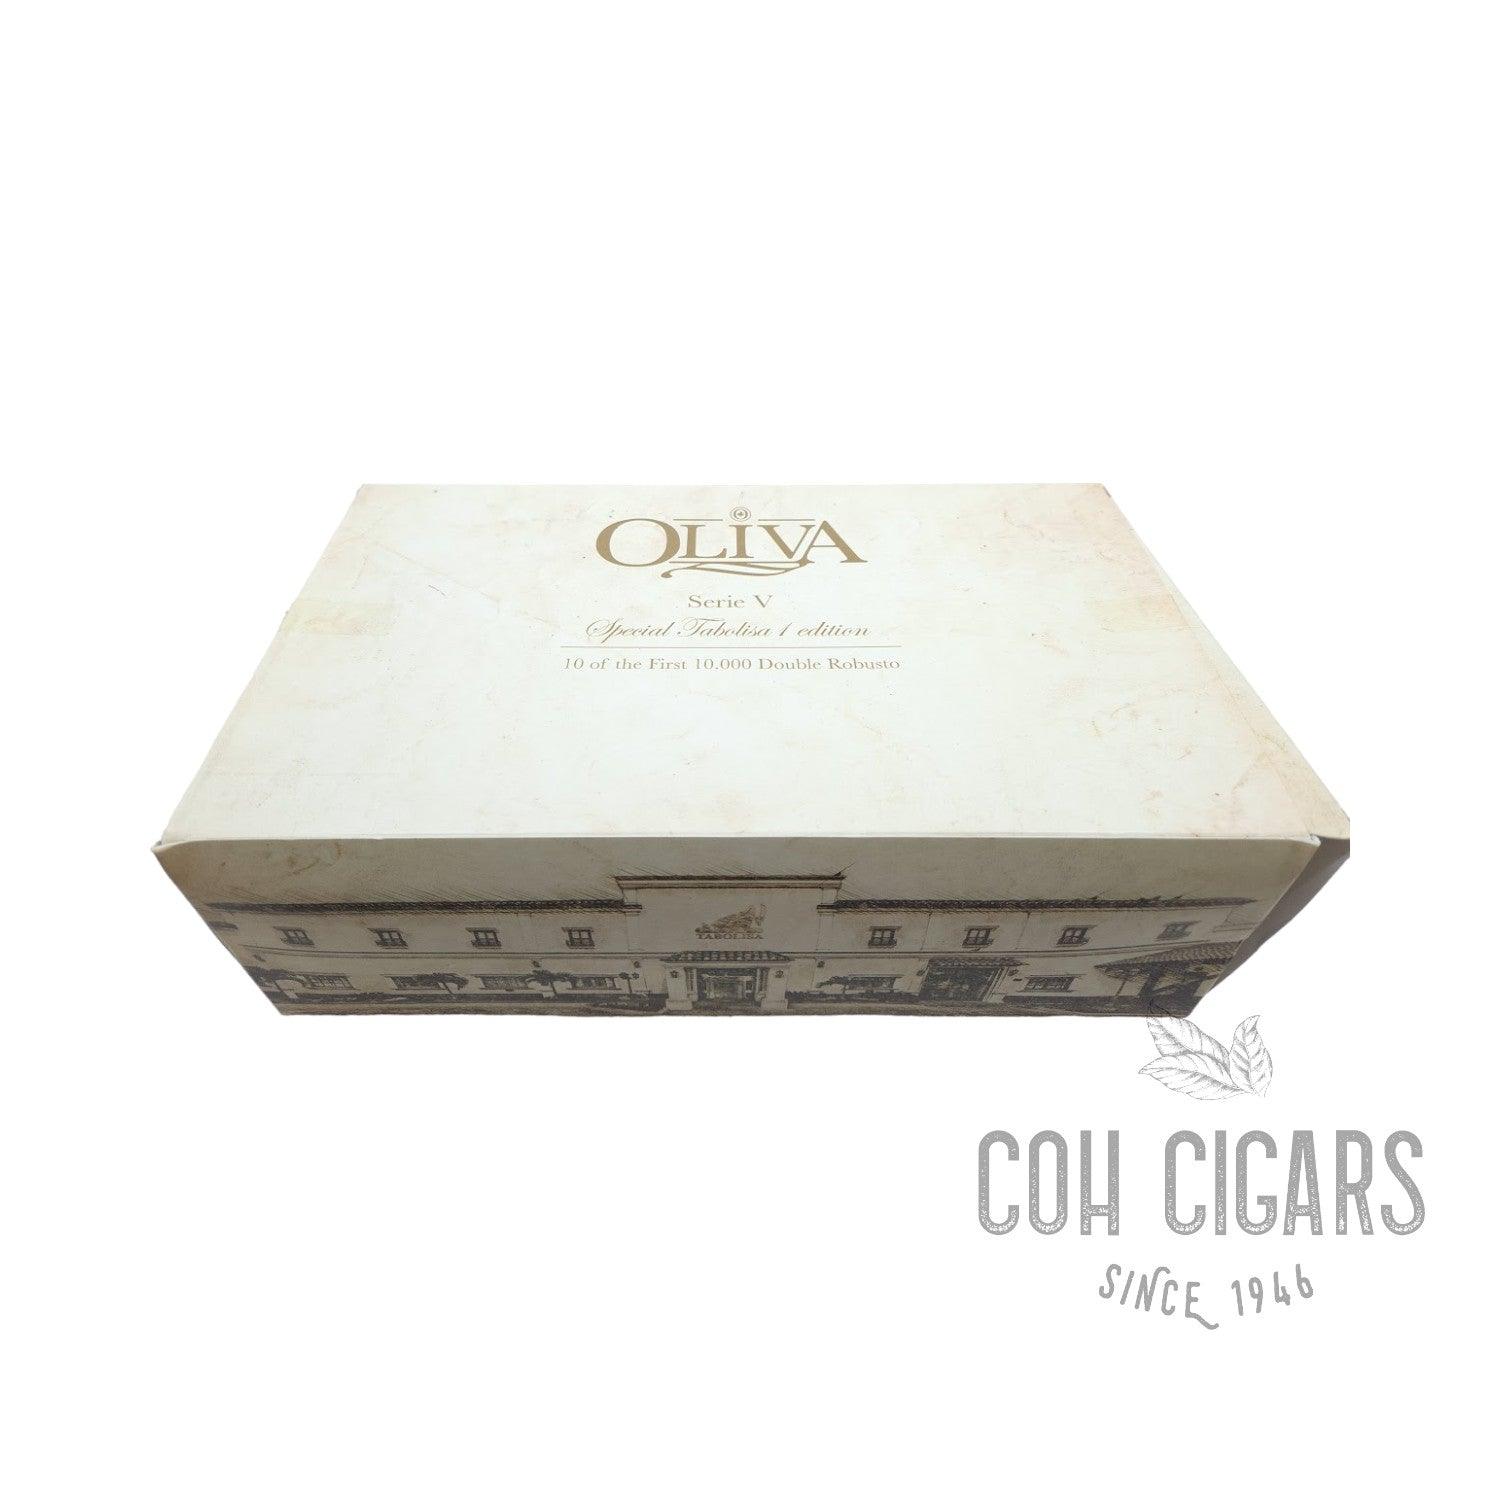 Oliva Serie V Special Tabolisa Edition Double Robusto Box 10 - hk.cohcigars